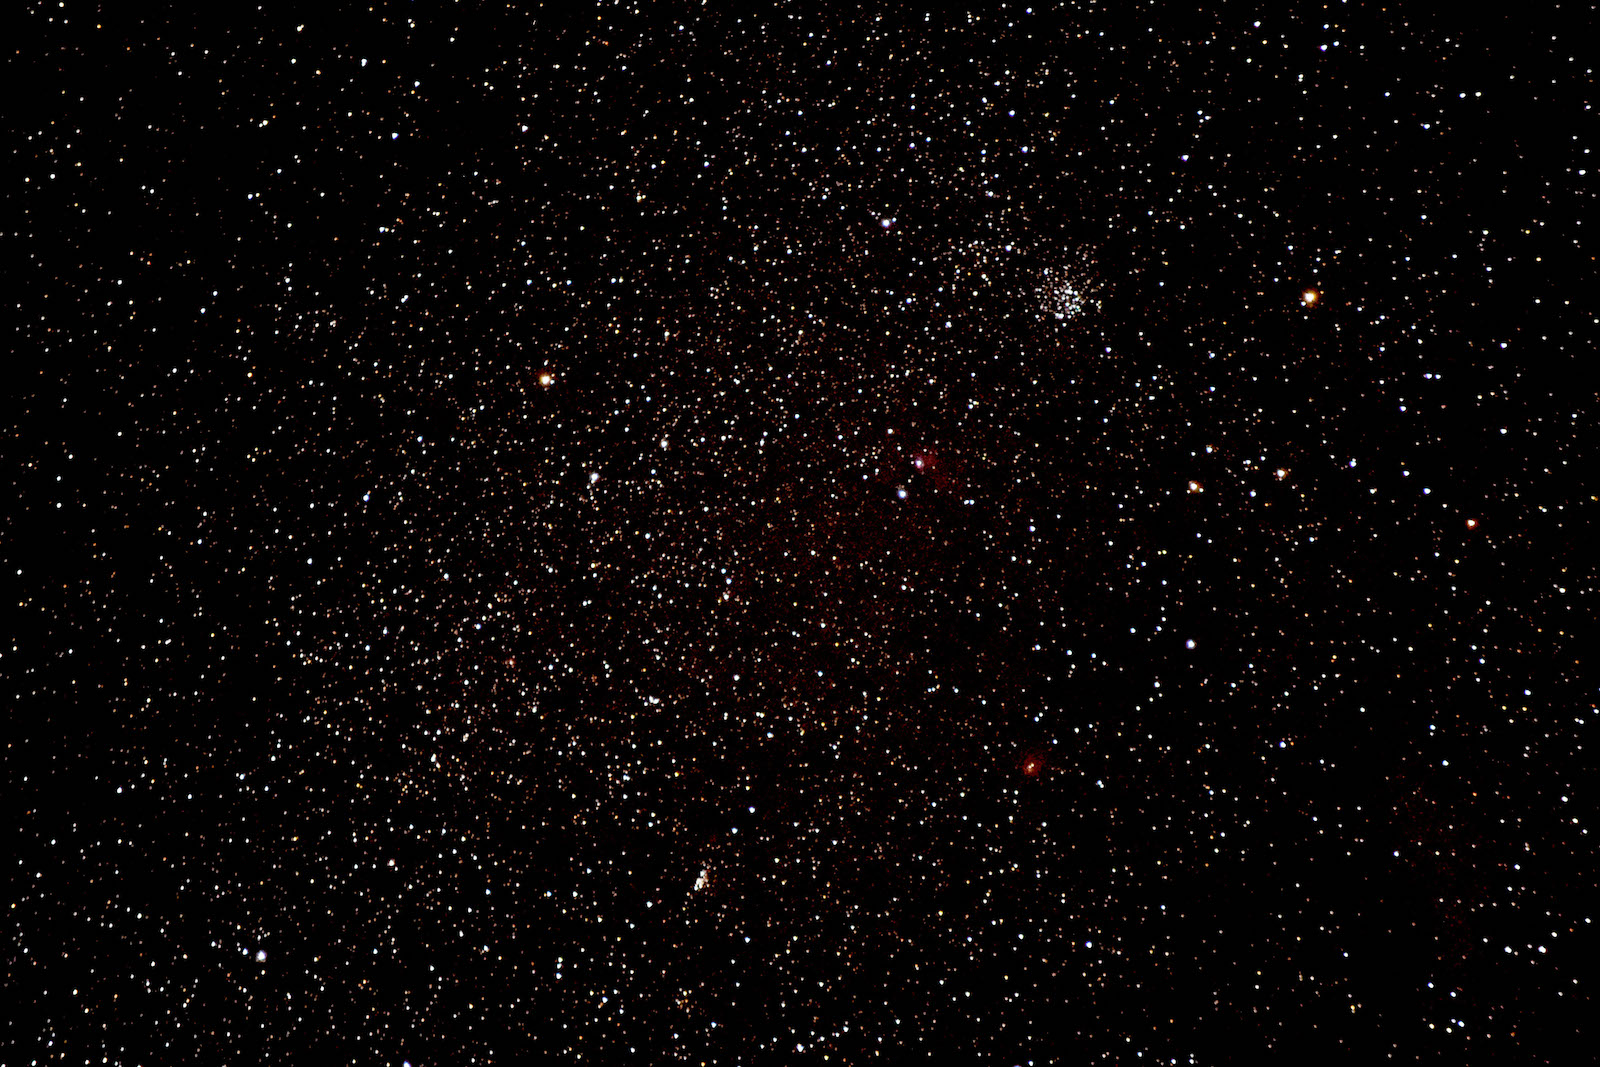 Wide-Field Image of the Bubble Nebula